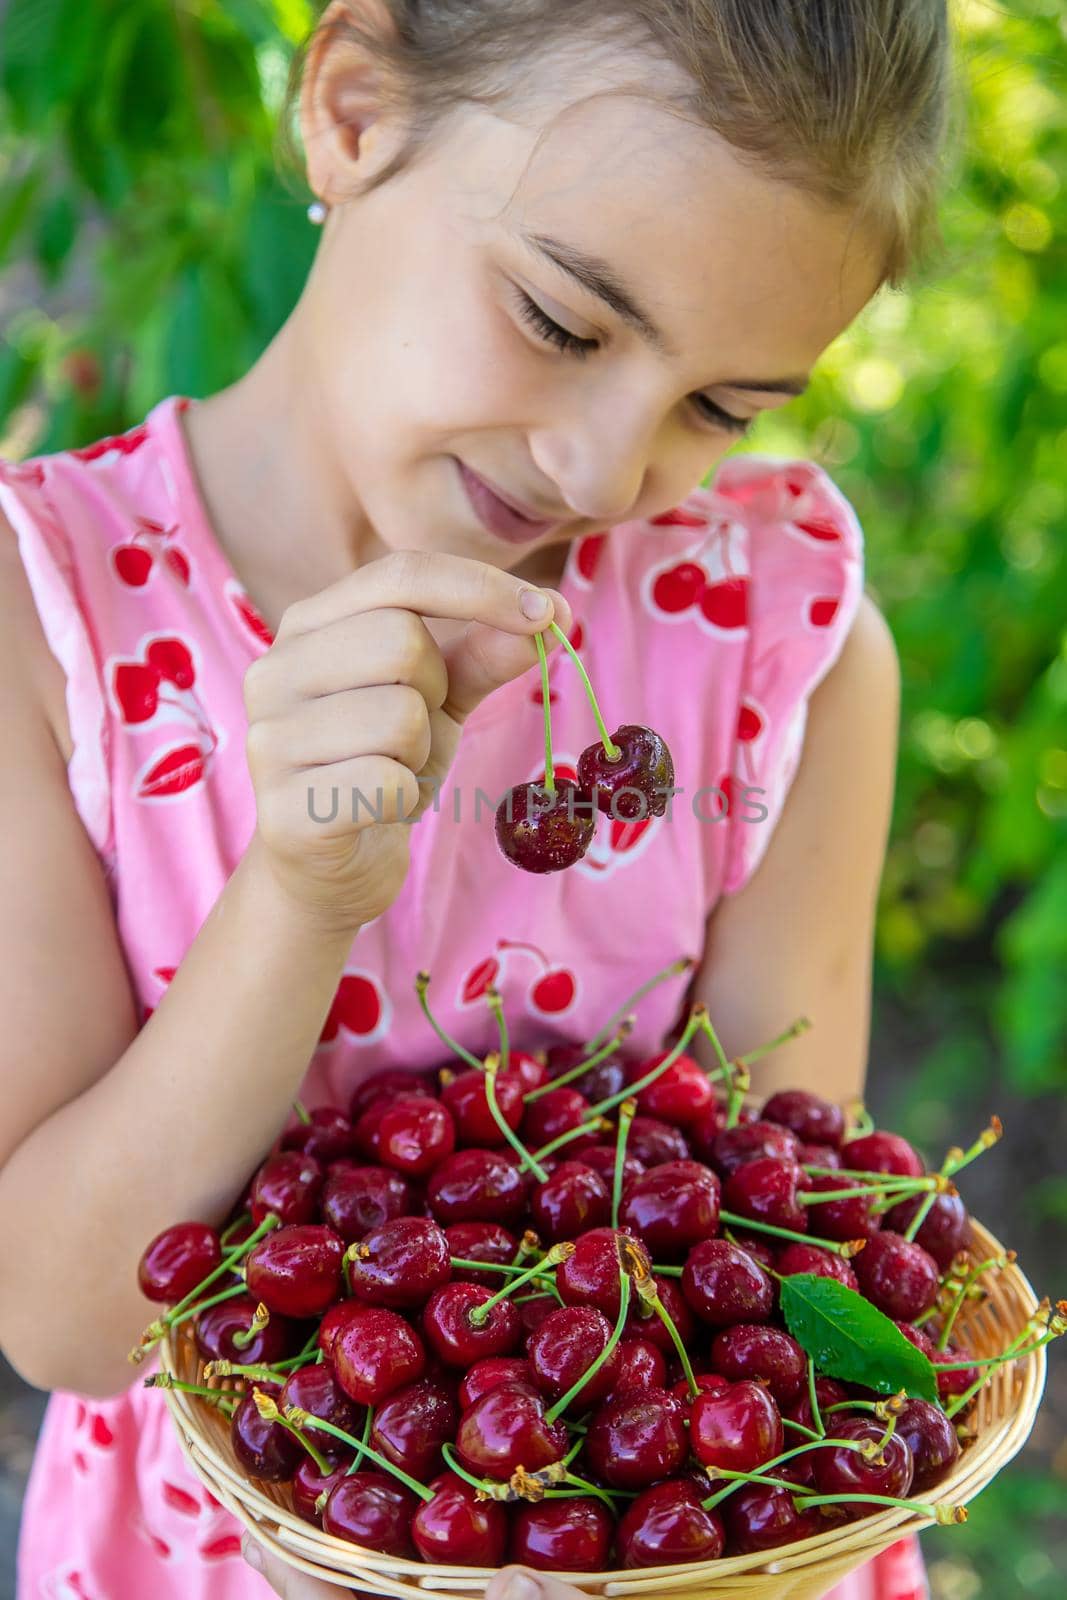 A child harvests cherries in the garden. Selective focus. Food.